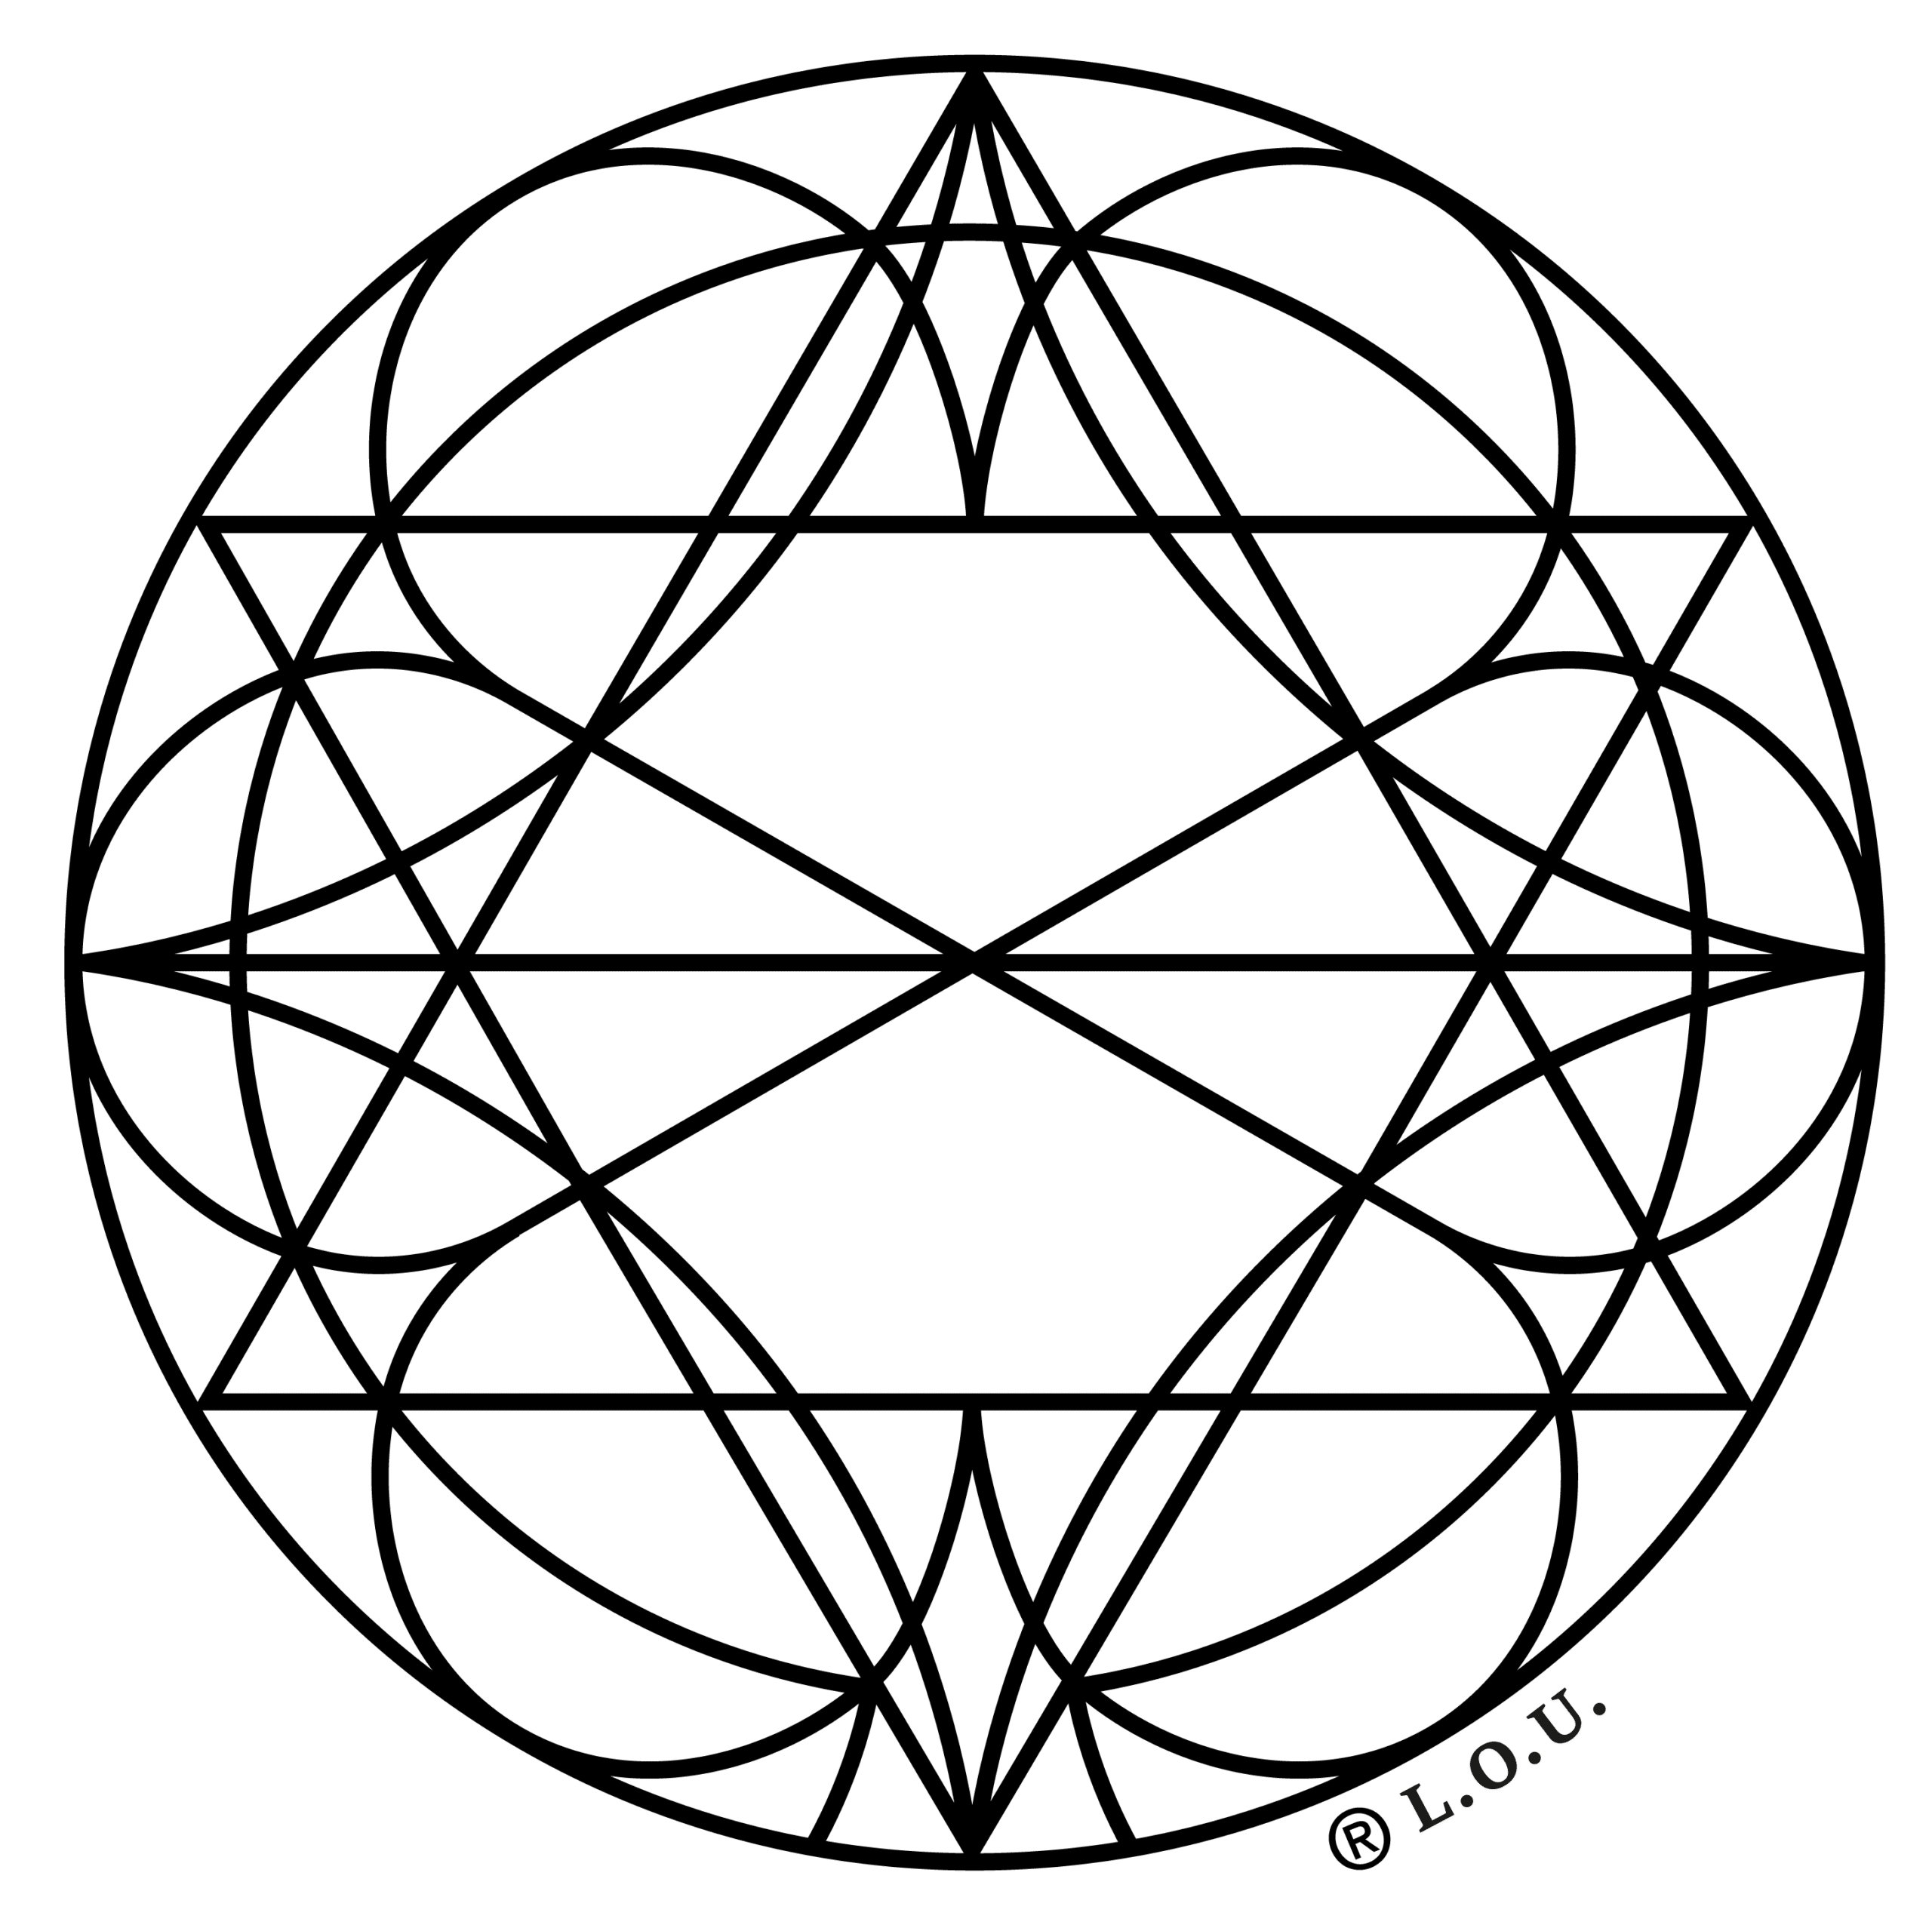 Basis krachtsymbool Ebonaq. Zwart gekleurd. Verschillende symbolen vormen een rond krachtsymbool.